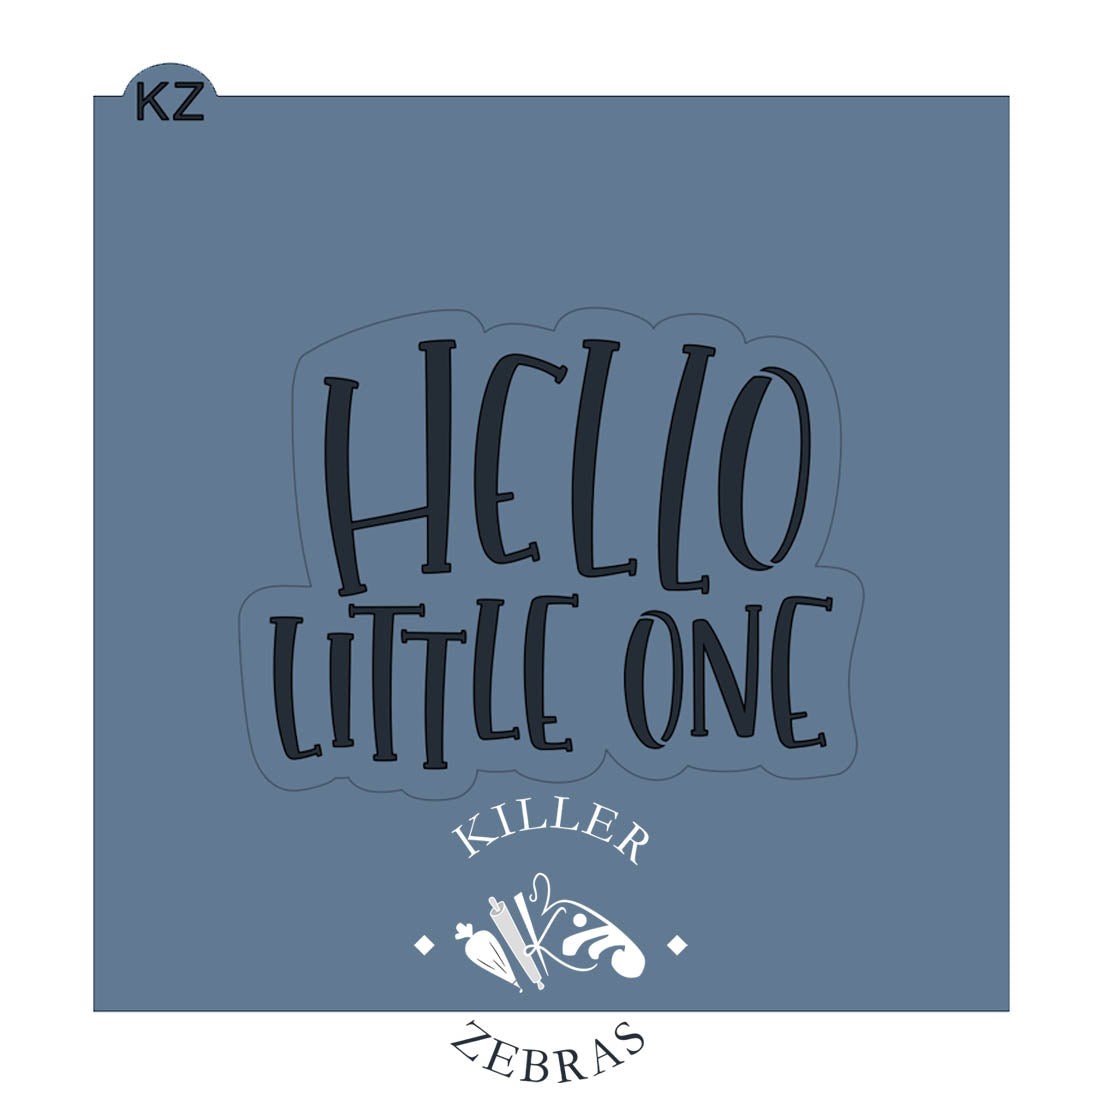 Hello Little One Cutter/Stencil